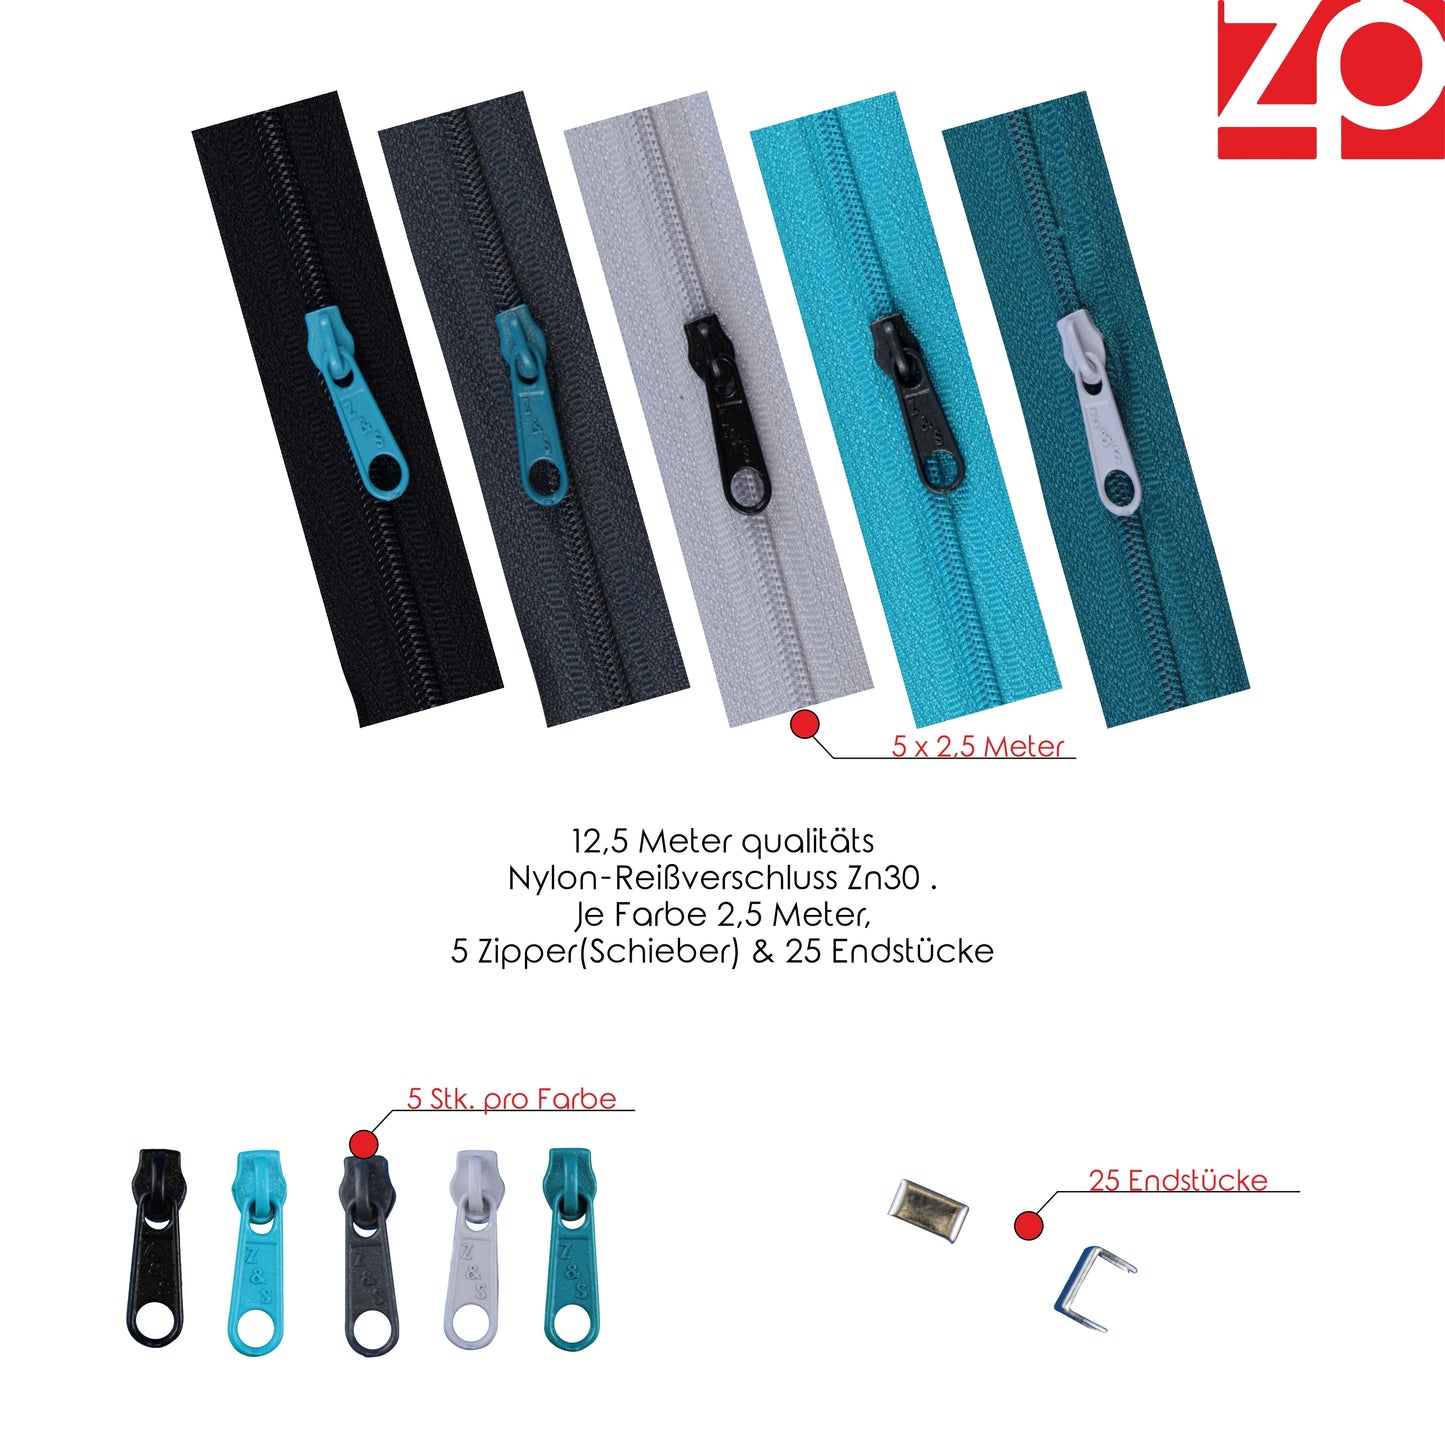 ZIPP AND SLIDE - endless zipper set with slider 3mm 12.5 meters - nickel free - color set no. 7 The original